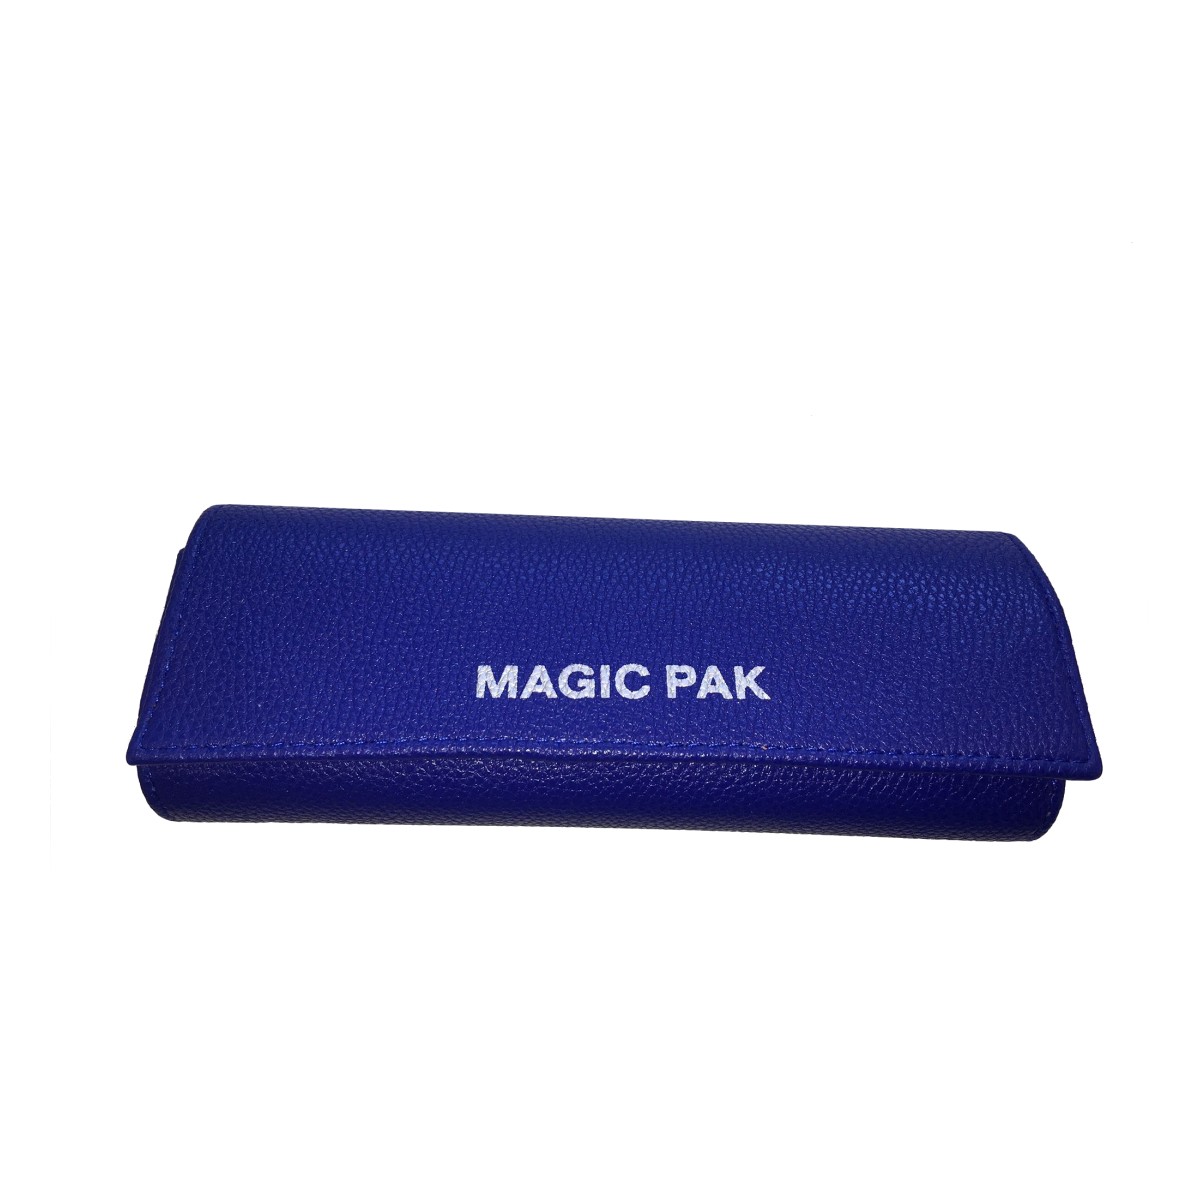 Darttasche Magic PAK blau